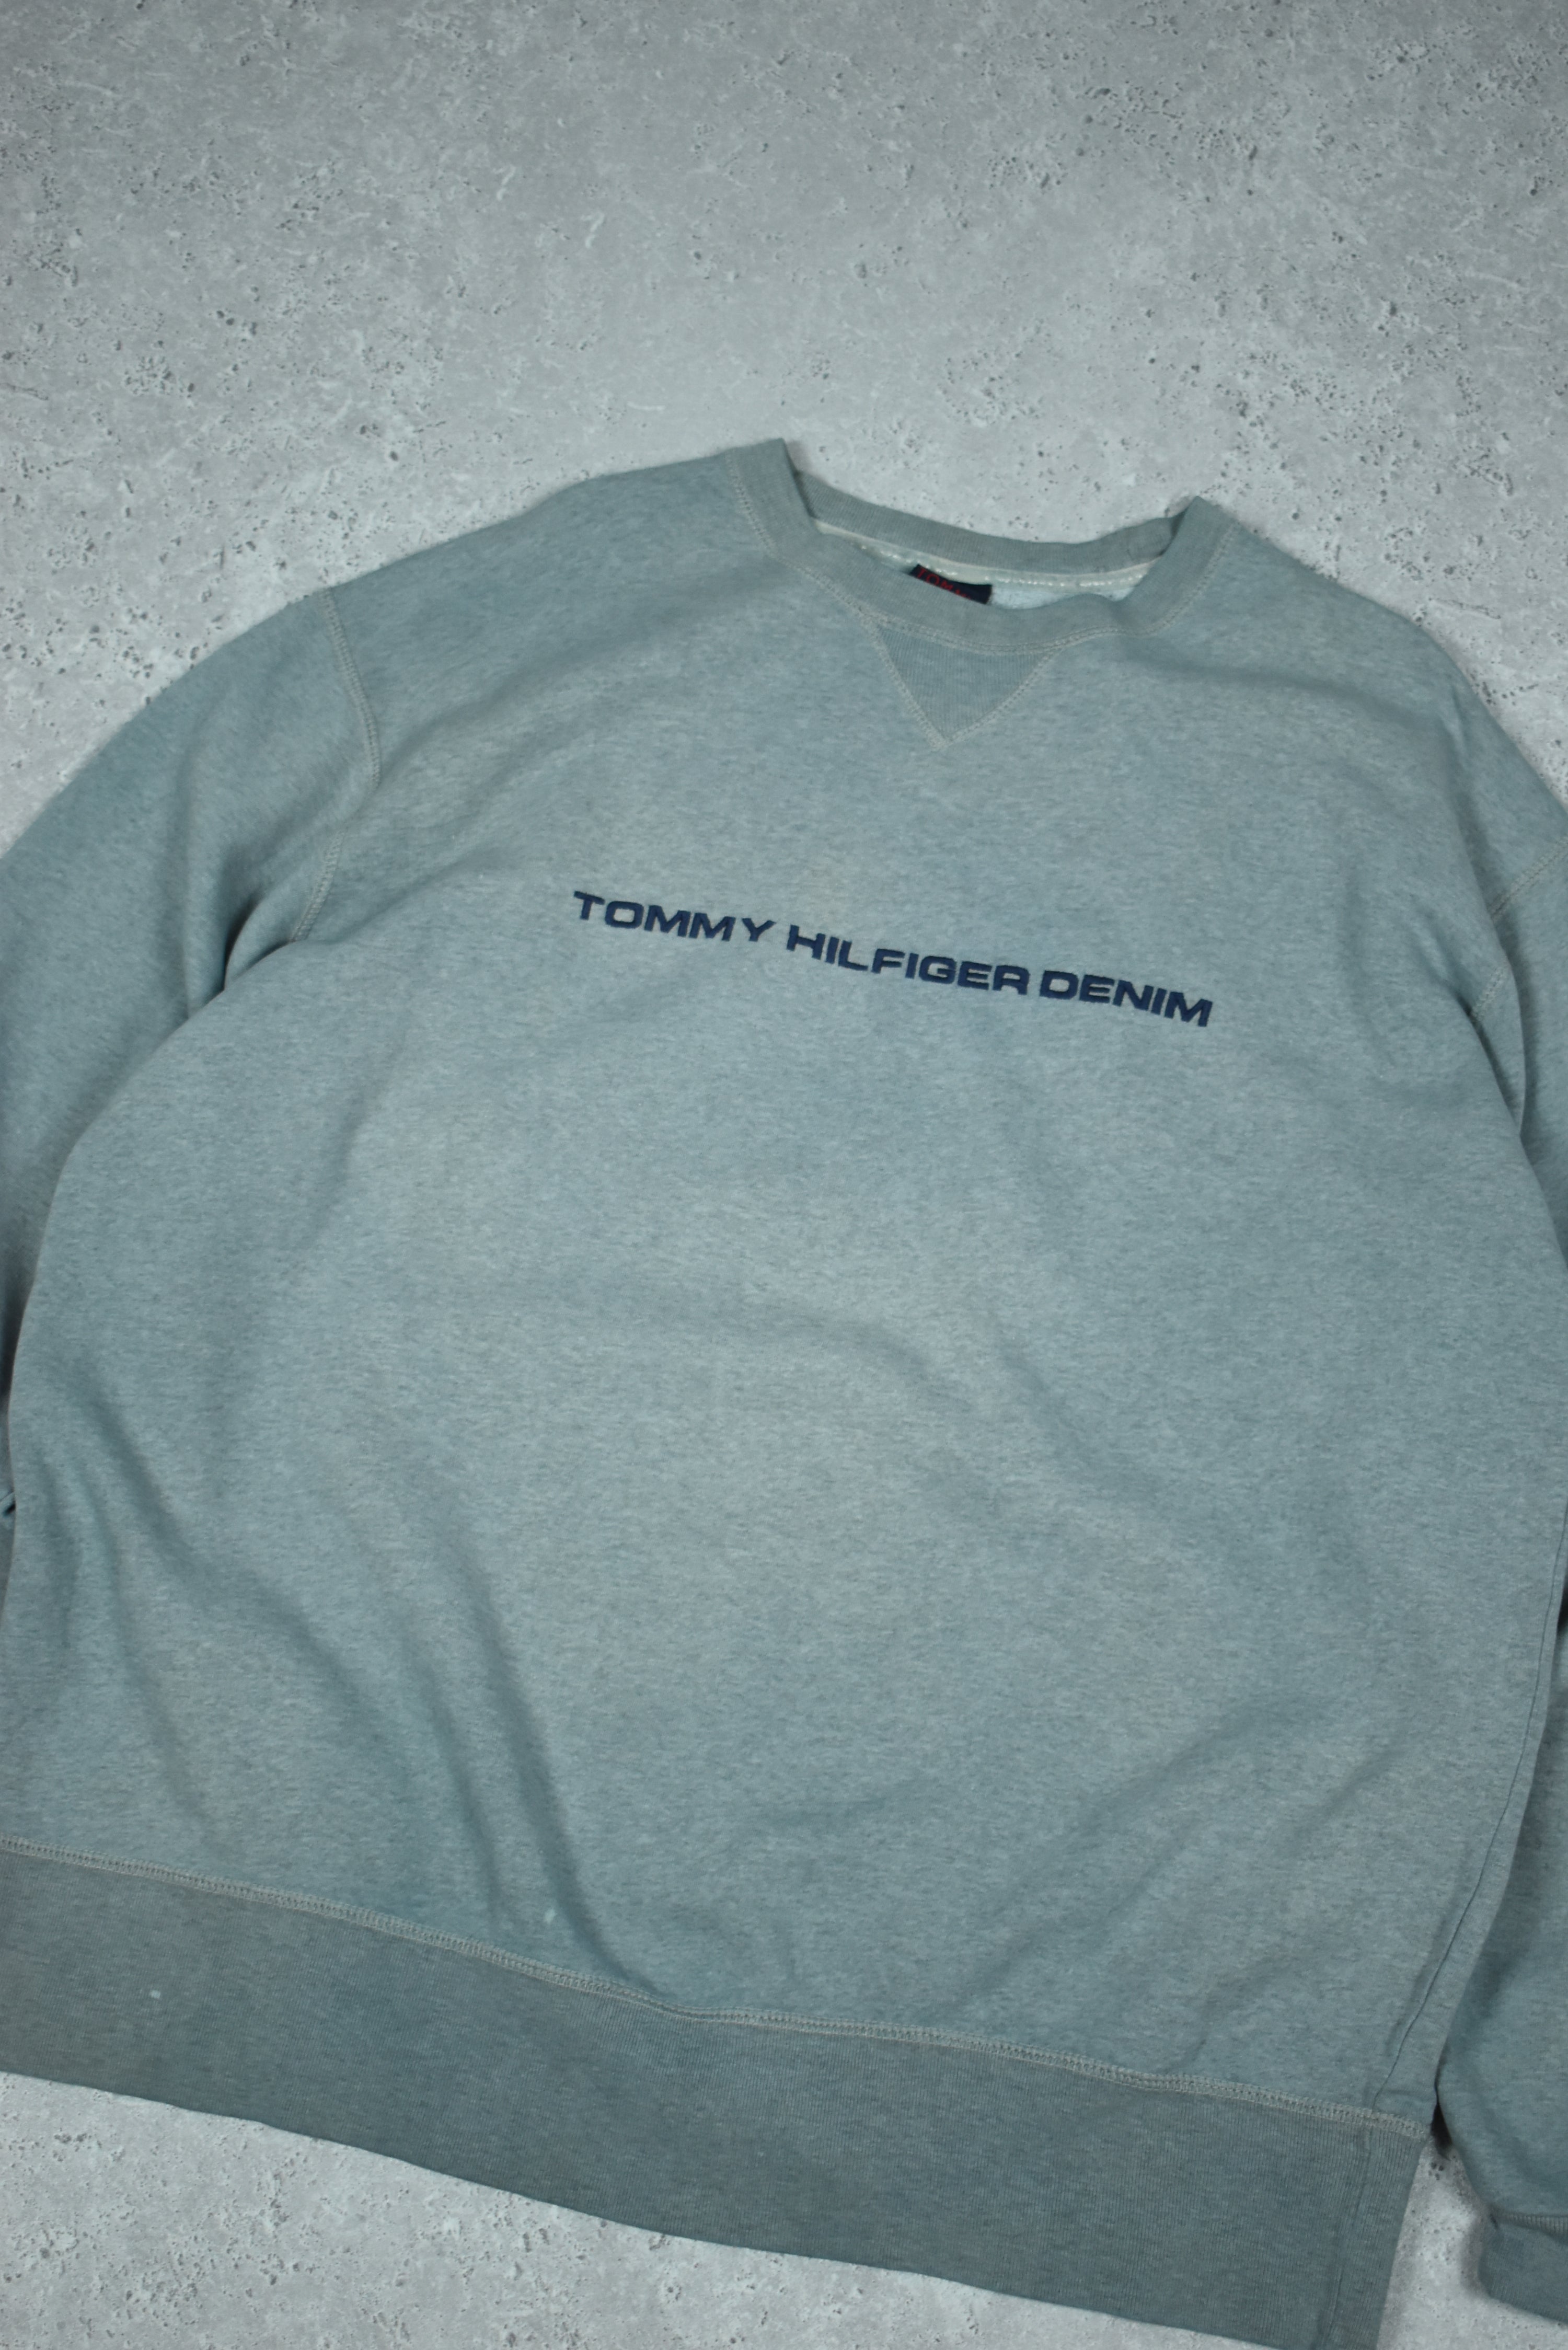 Vintage Tommy Hilfiger Embroidered Sweatshirt Medium